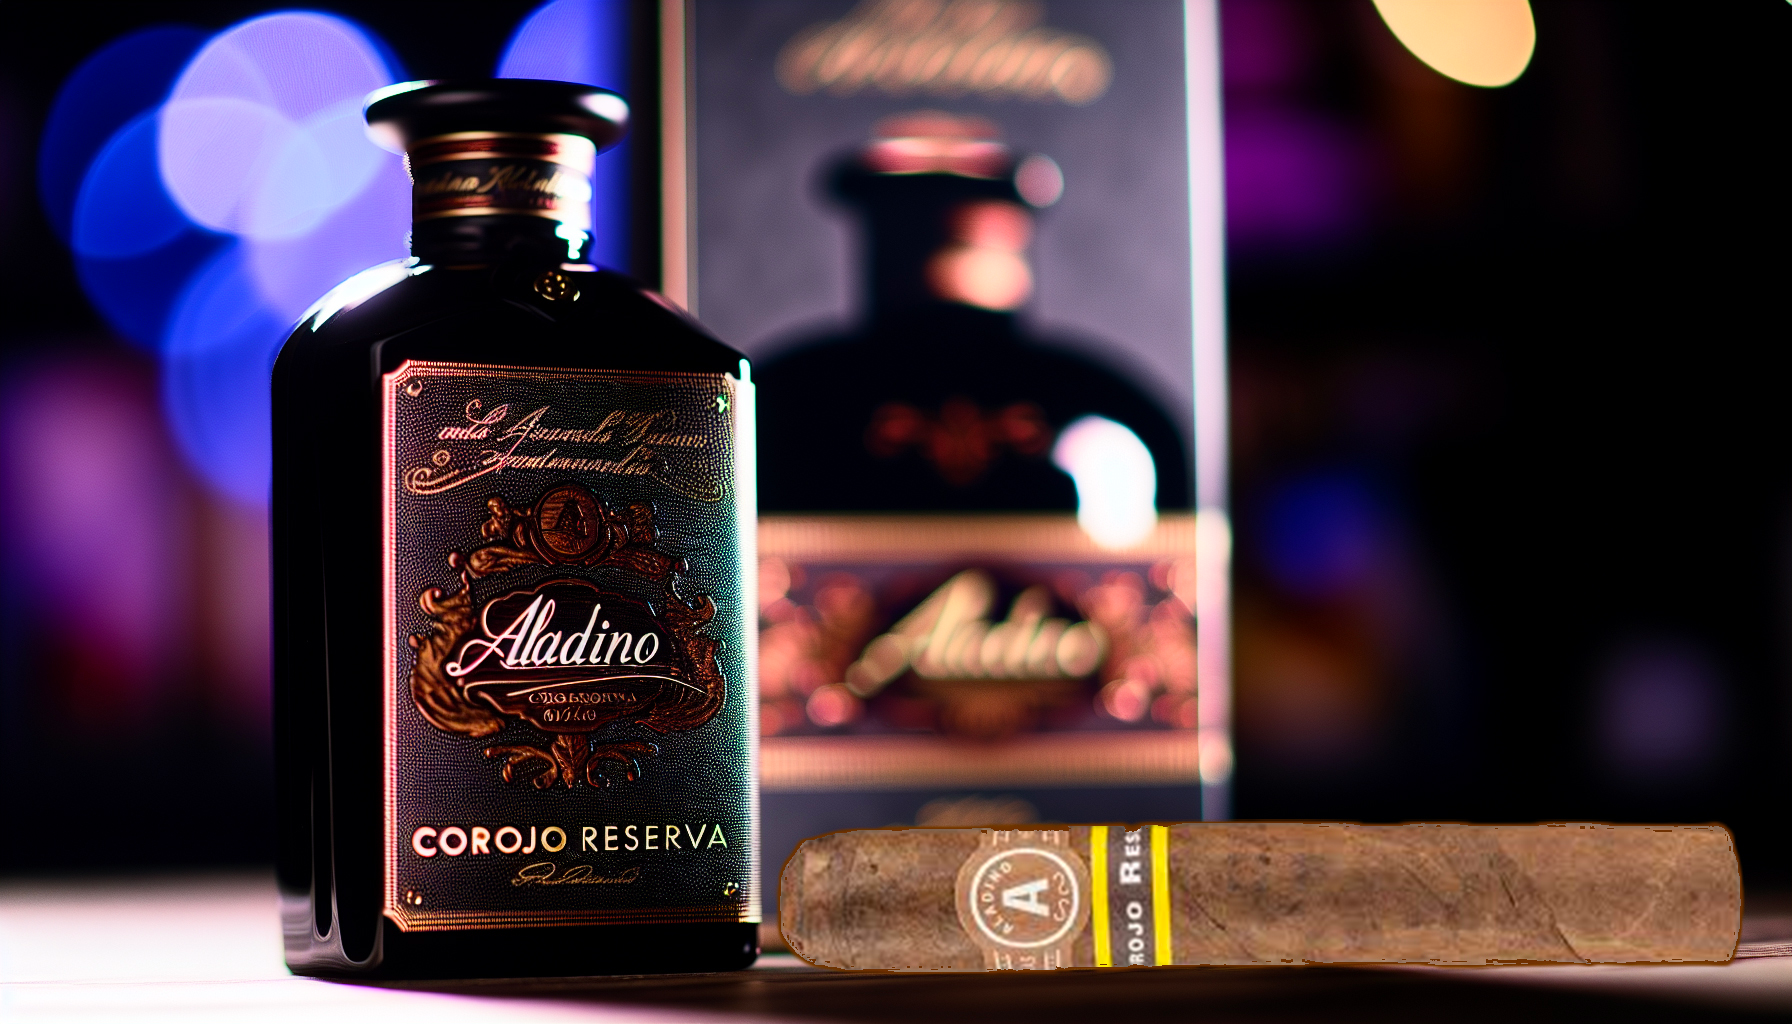 Vintage packaging of Aladino Corojo Reserva cigar